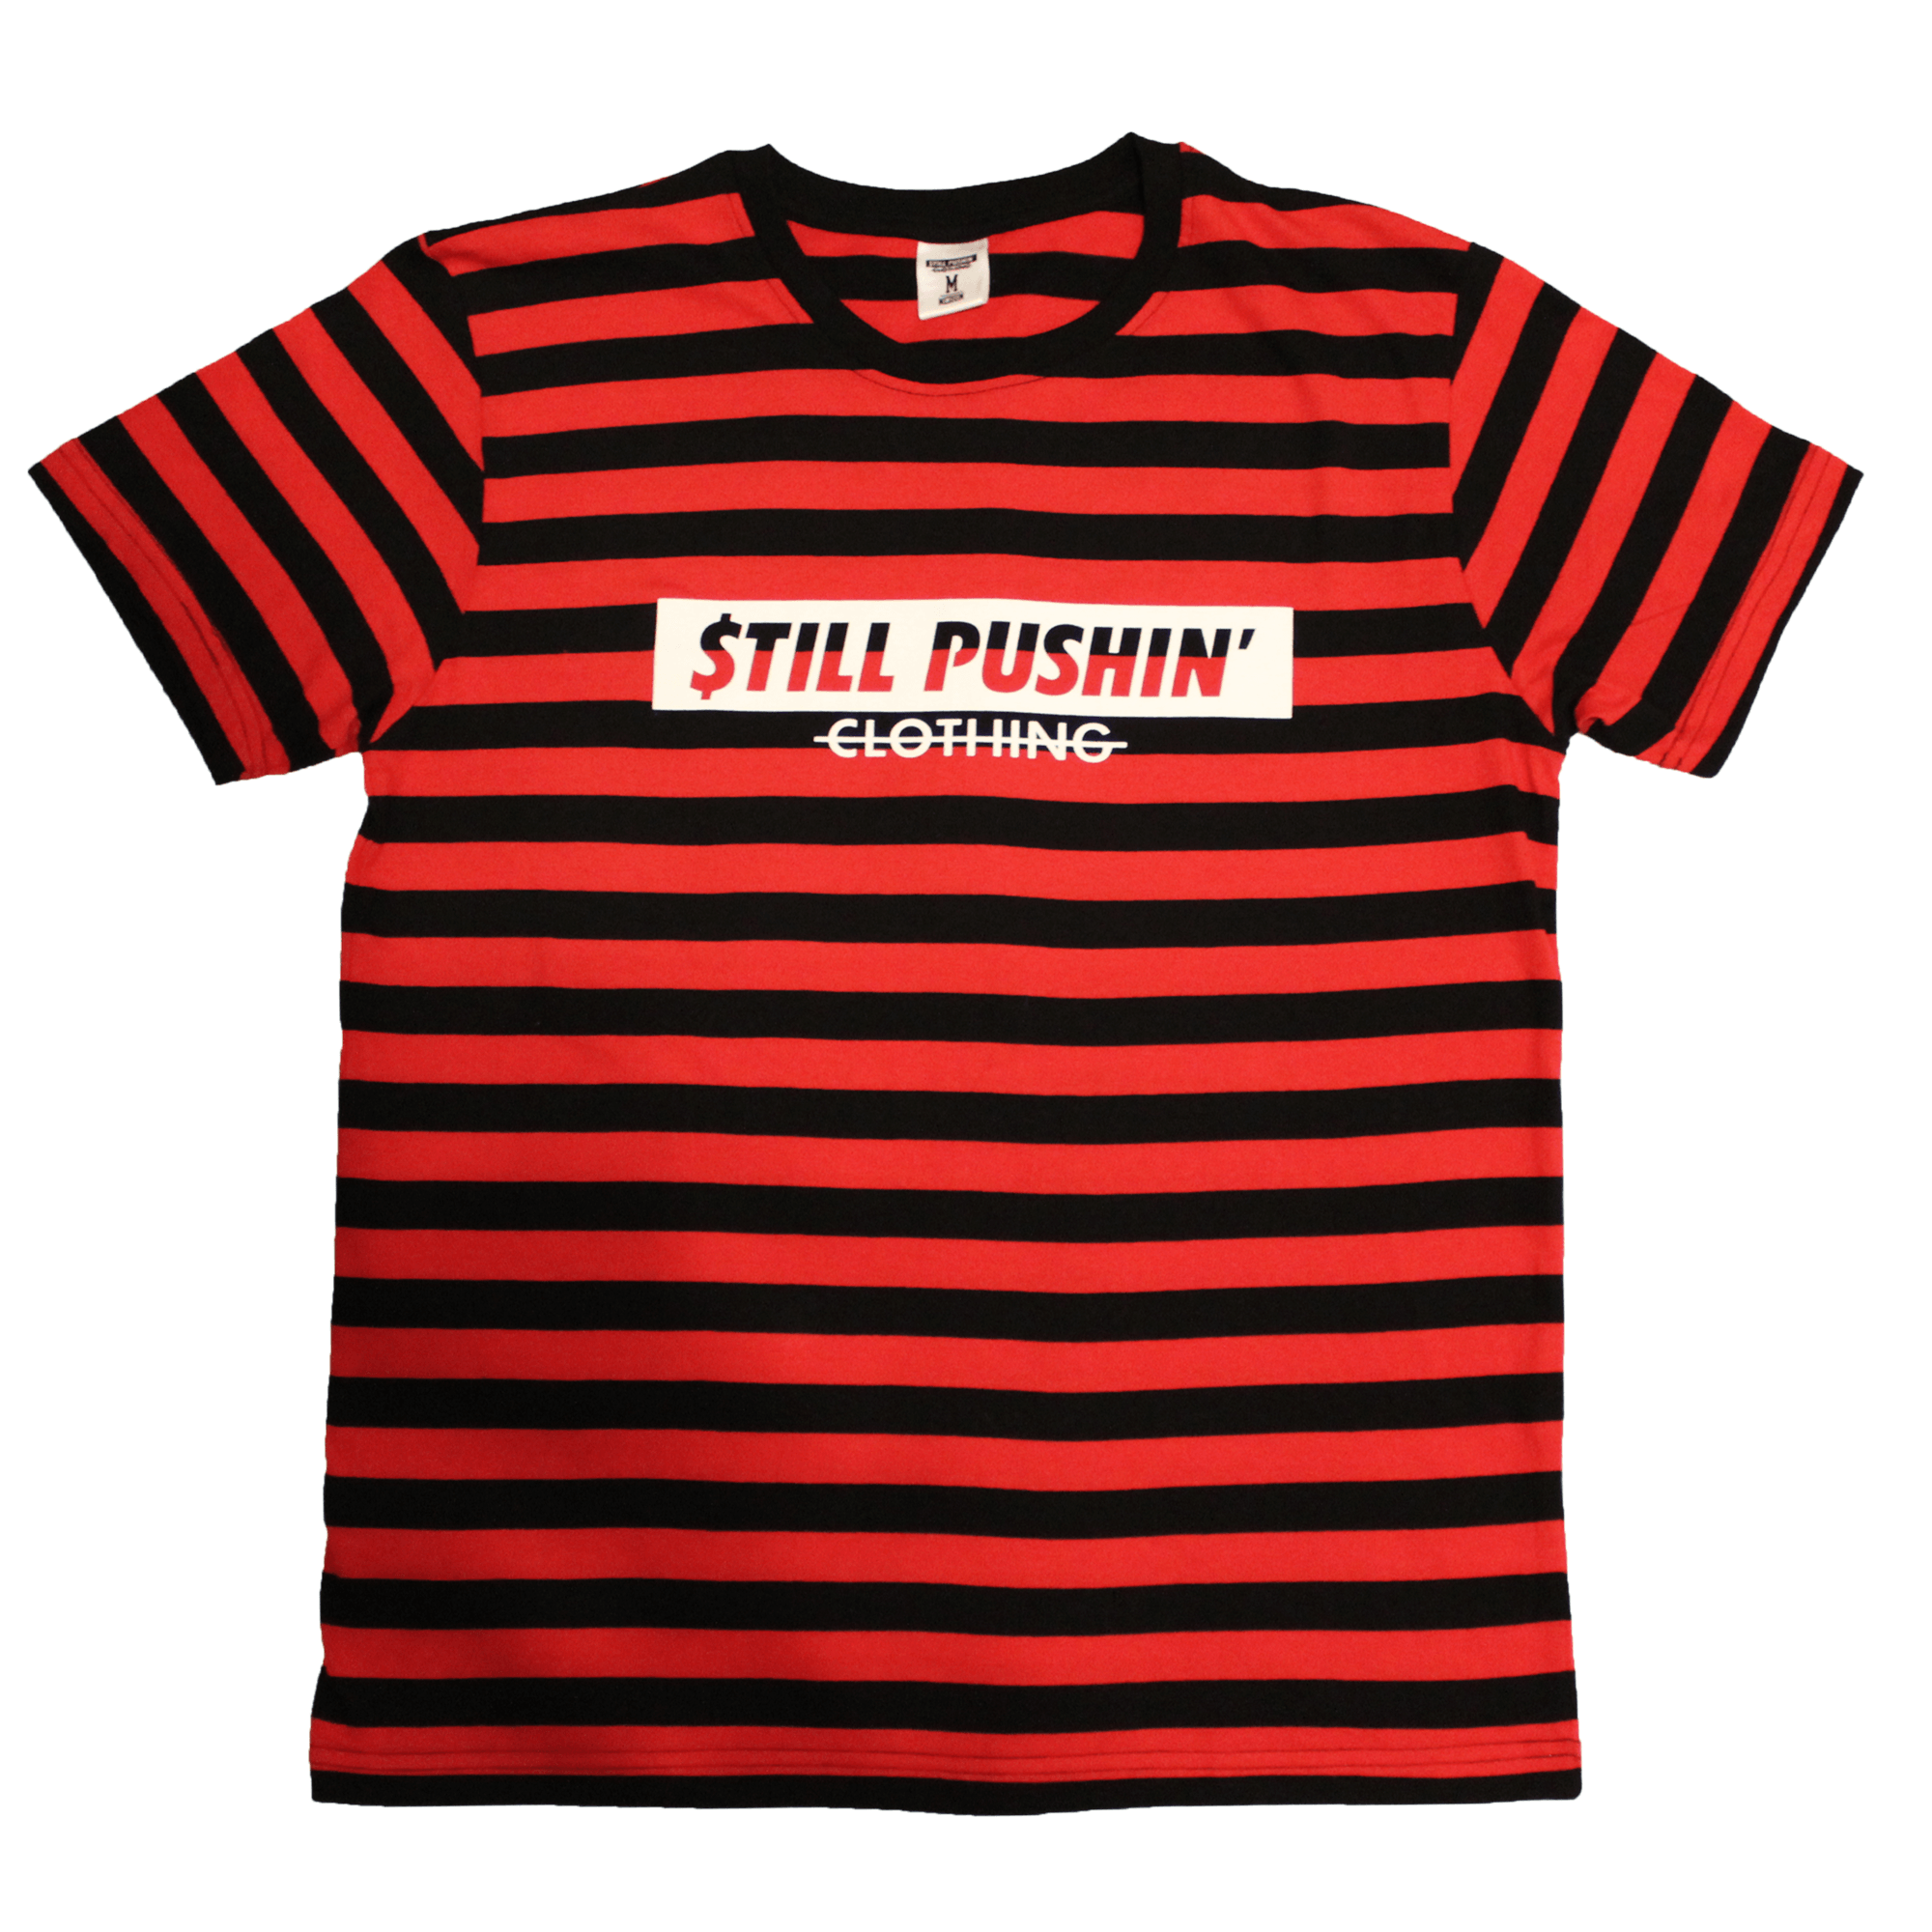 Black and Red N Logo - Red n Black Stripes Logo Shirt. Still Pushin' Clothing